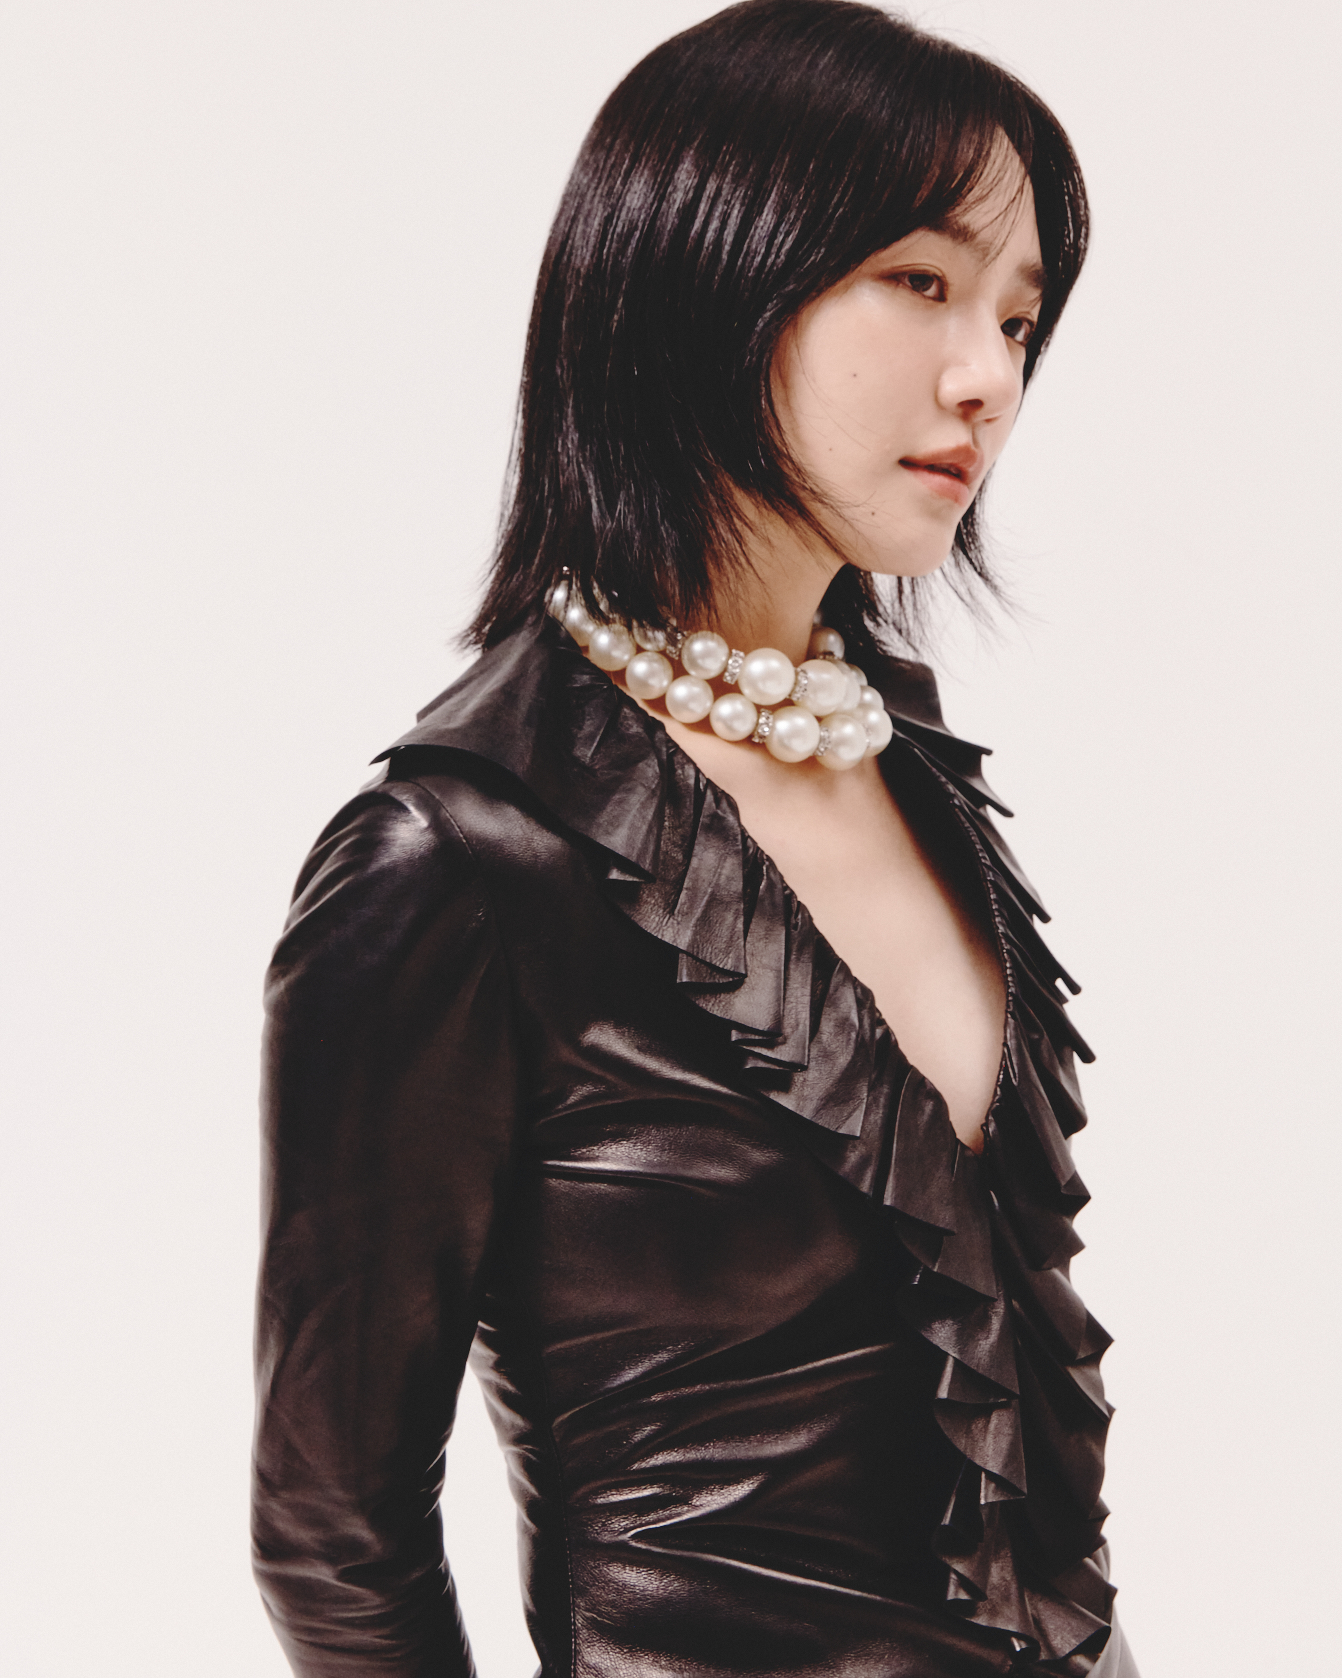 Gyuyoung Park - ambassador Gucci 